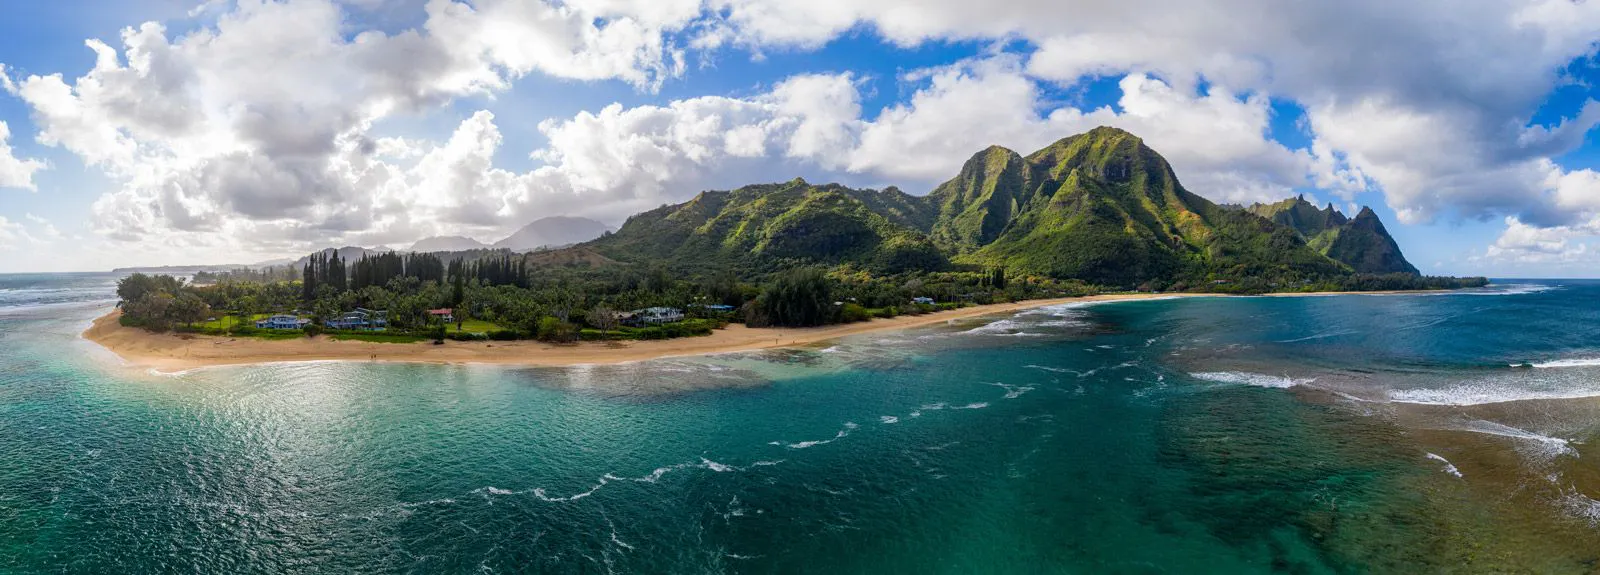 Panoramic view of Kauai in Hawaii